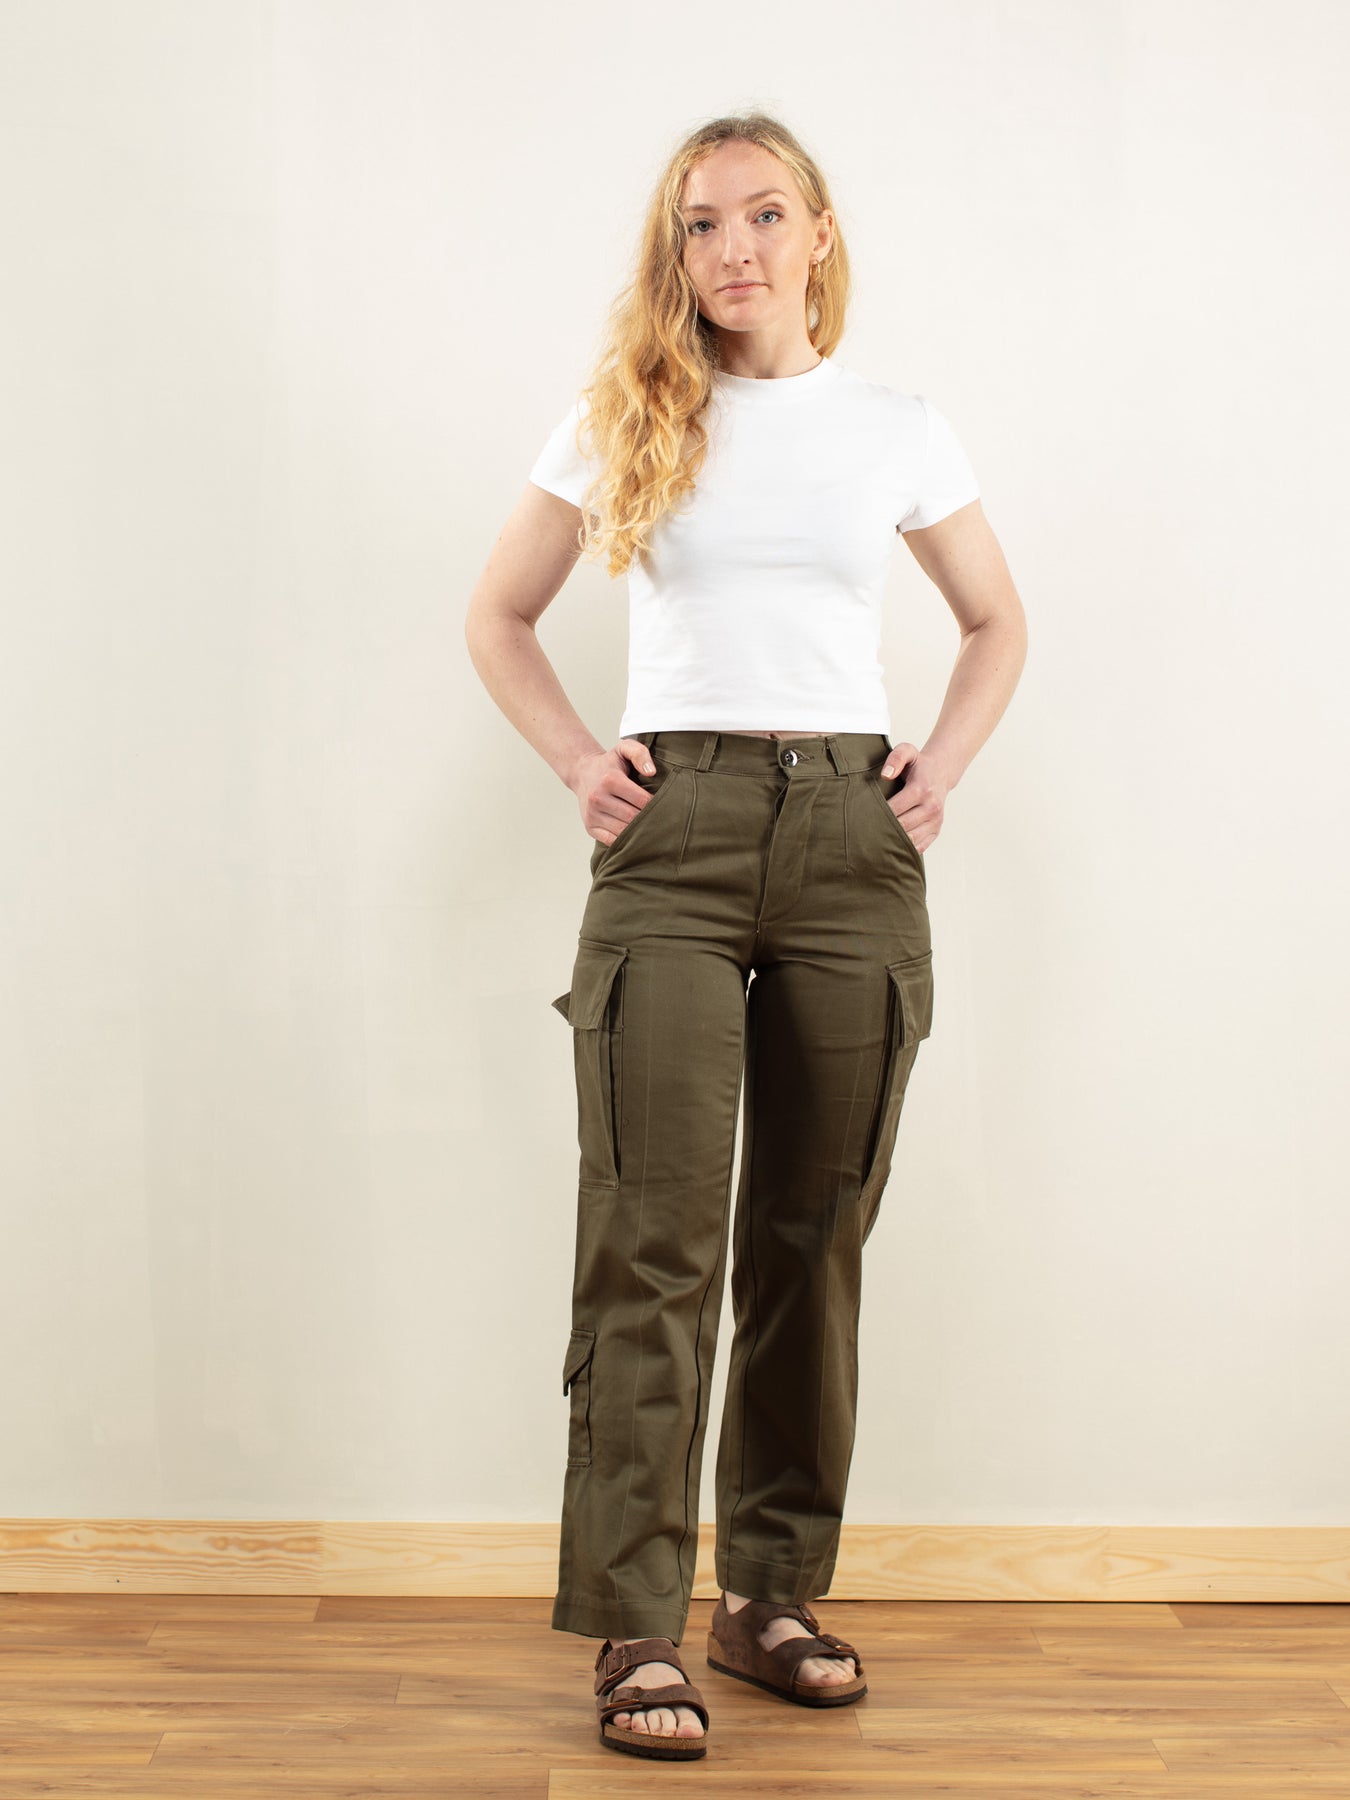 Cute Camo Print Pants - Belted Pants - Cargo Pants - Army Pant - Lulus